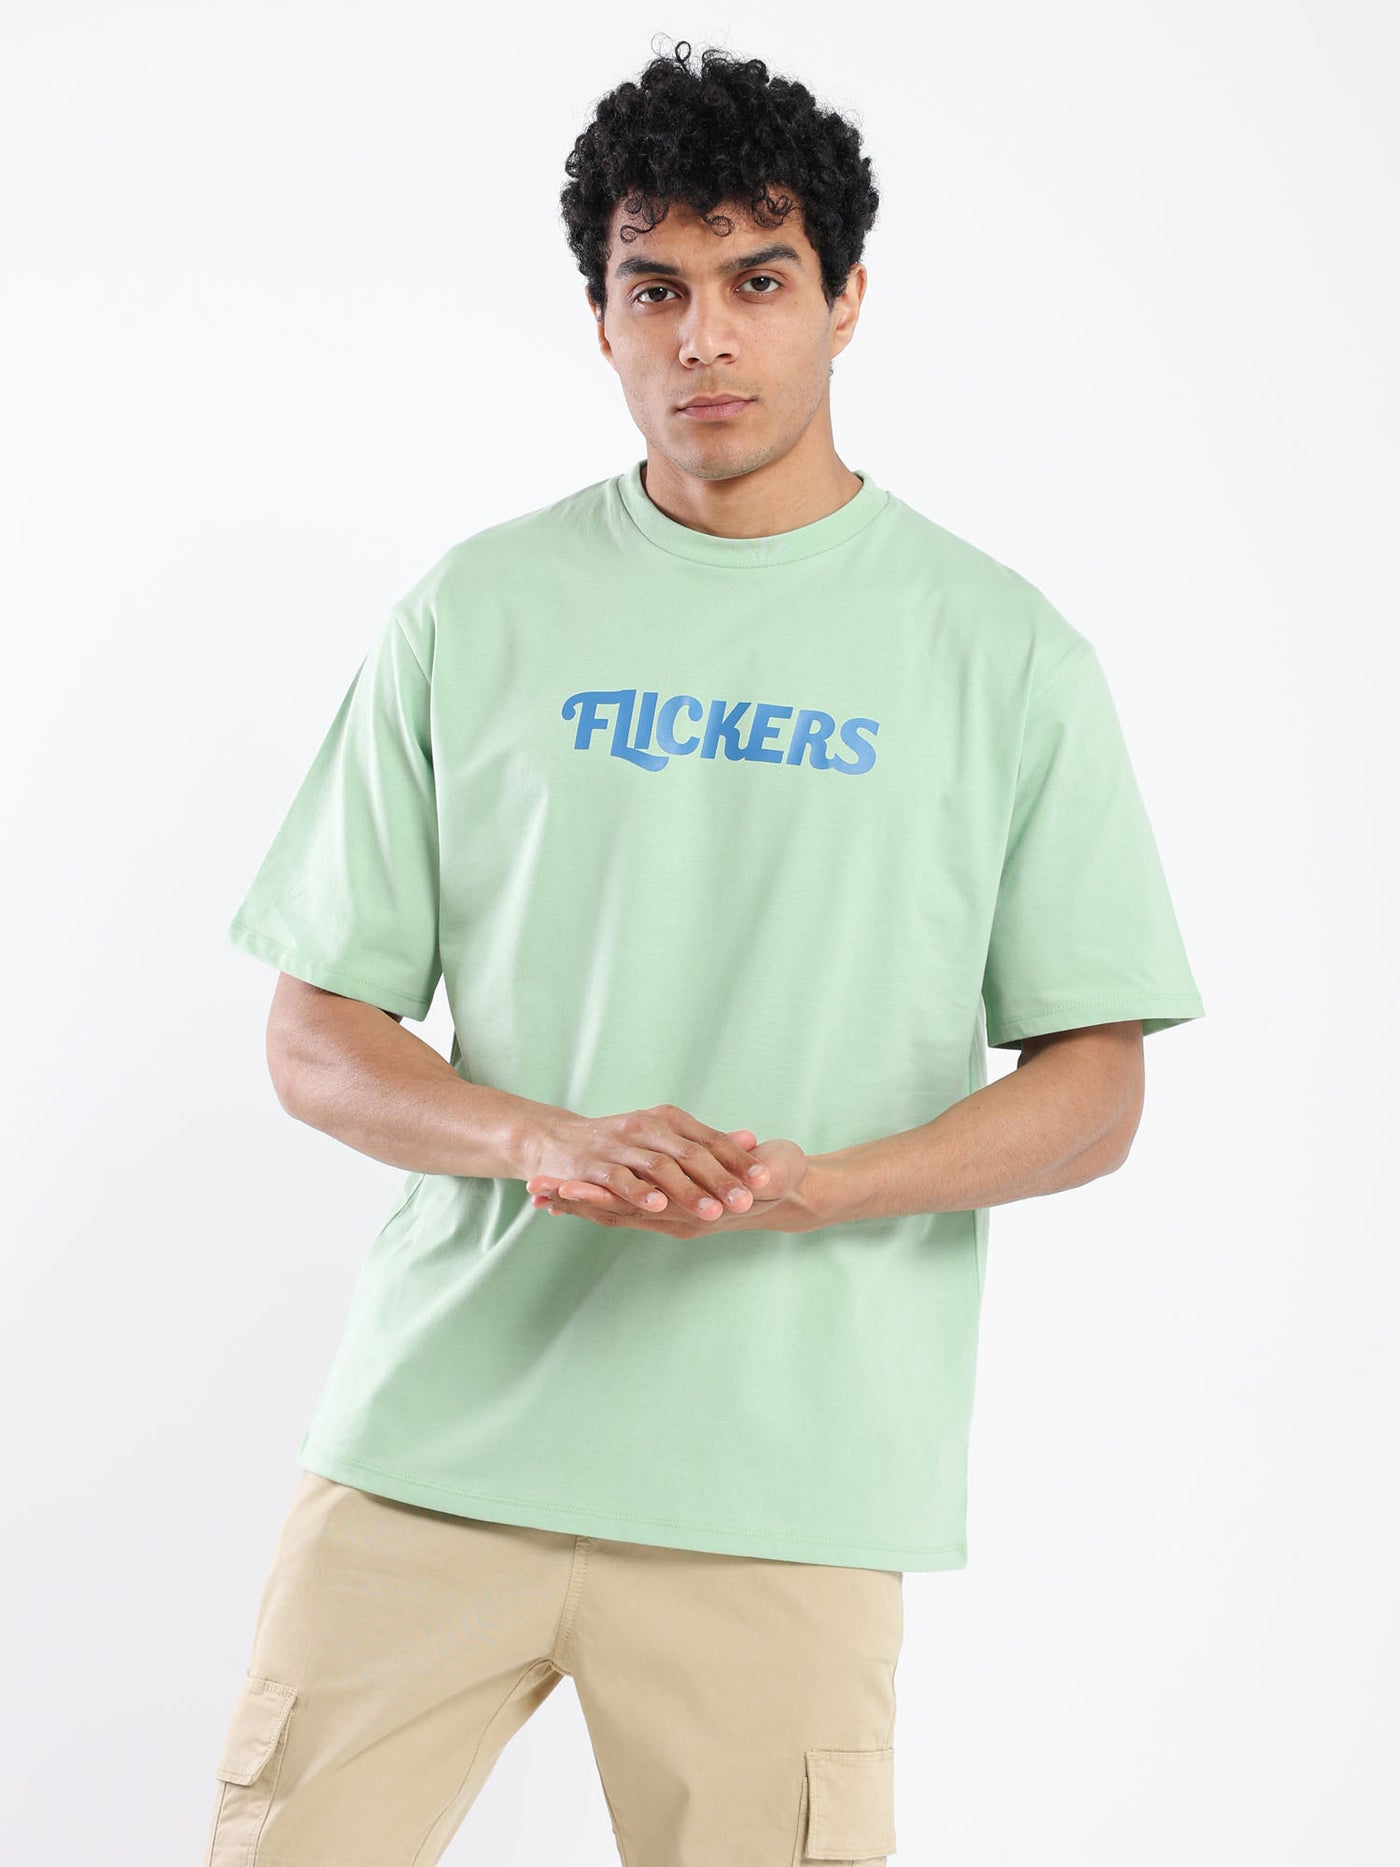 T-Shirt - "Flickers" Print - Oversized